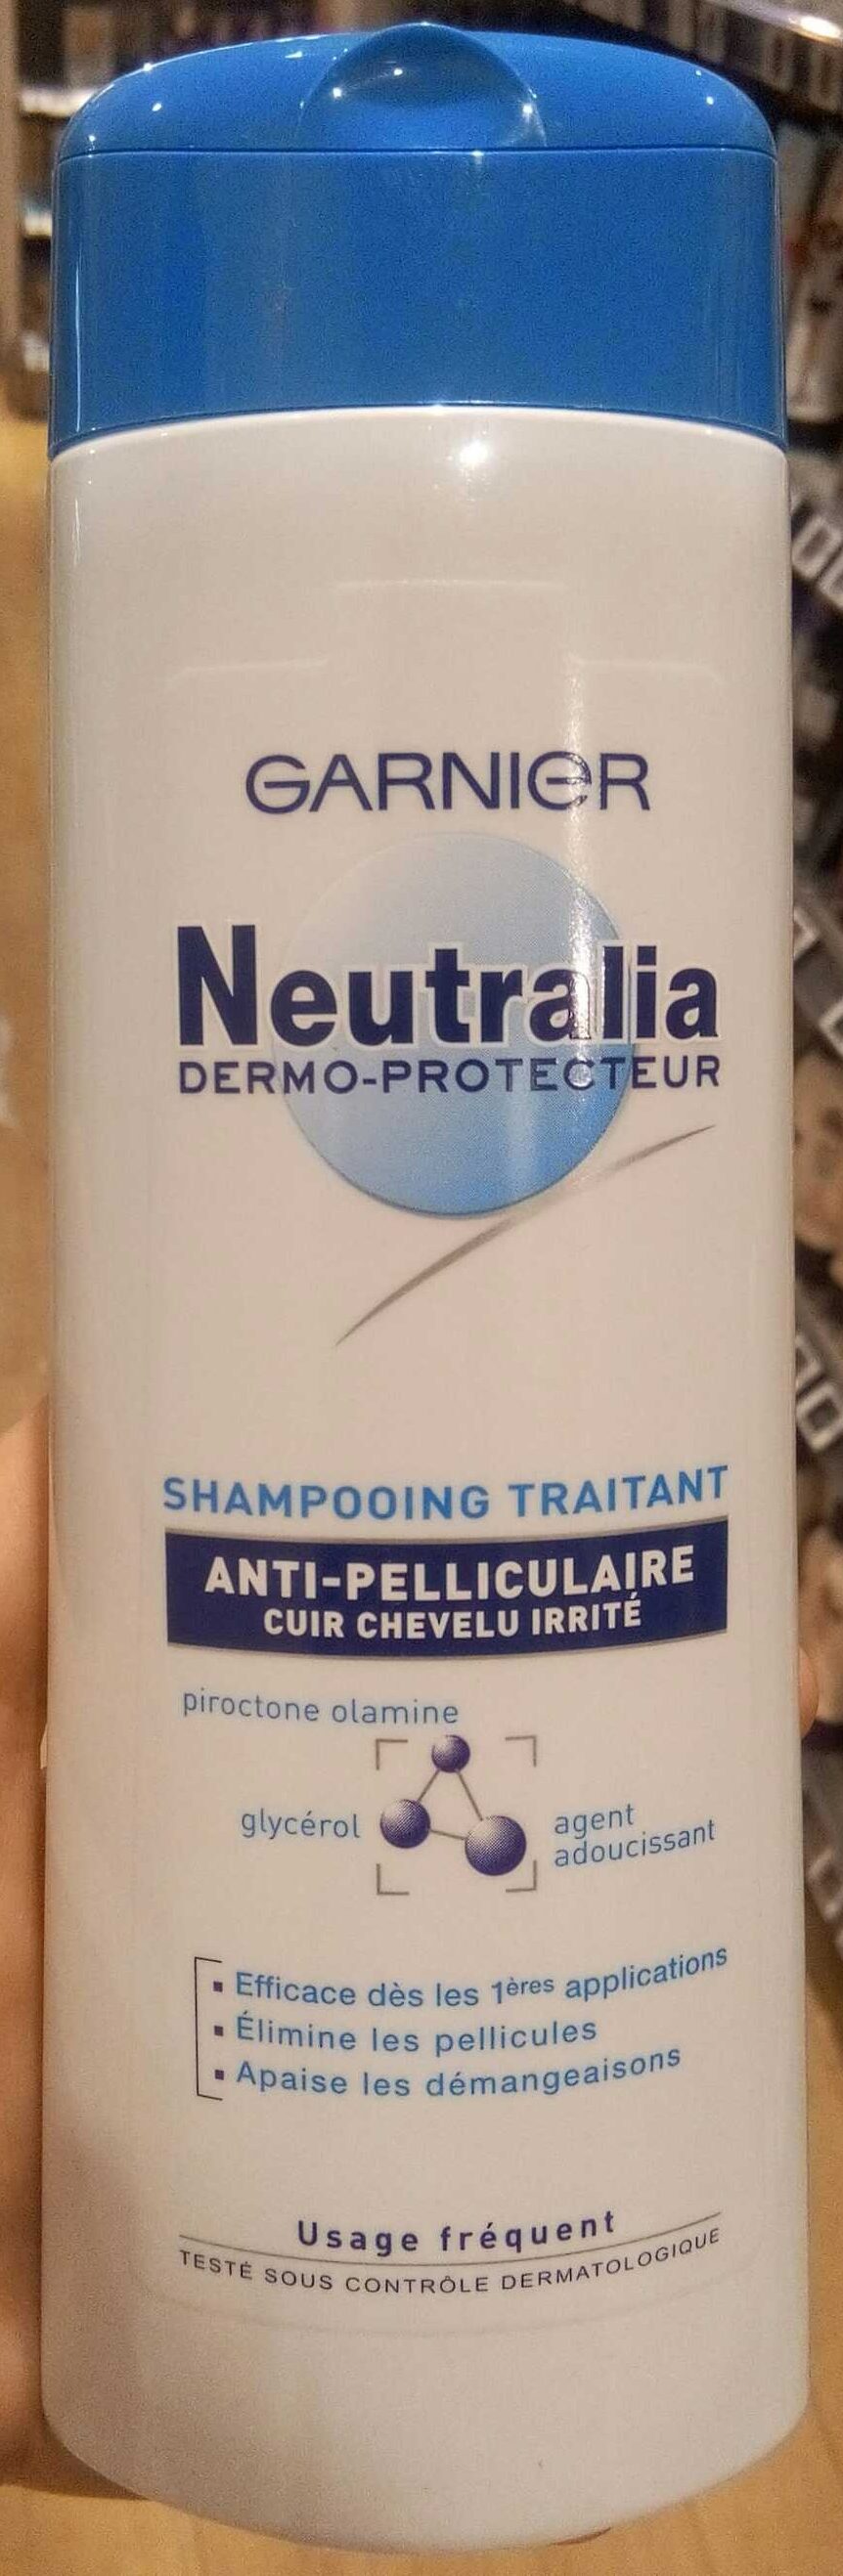 Neutralia Dermo-Protecteur Shampooing Traitant Anti-Pelliculaire - Product - fr